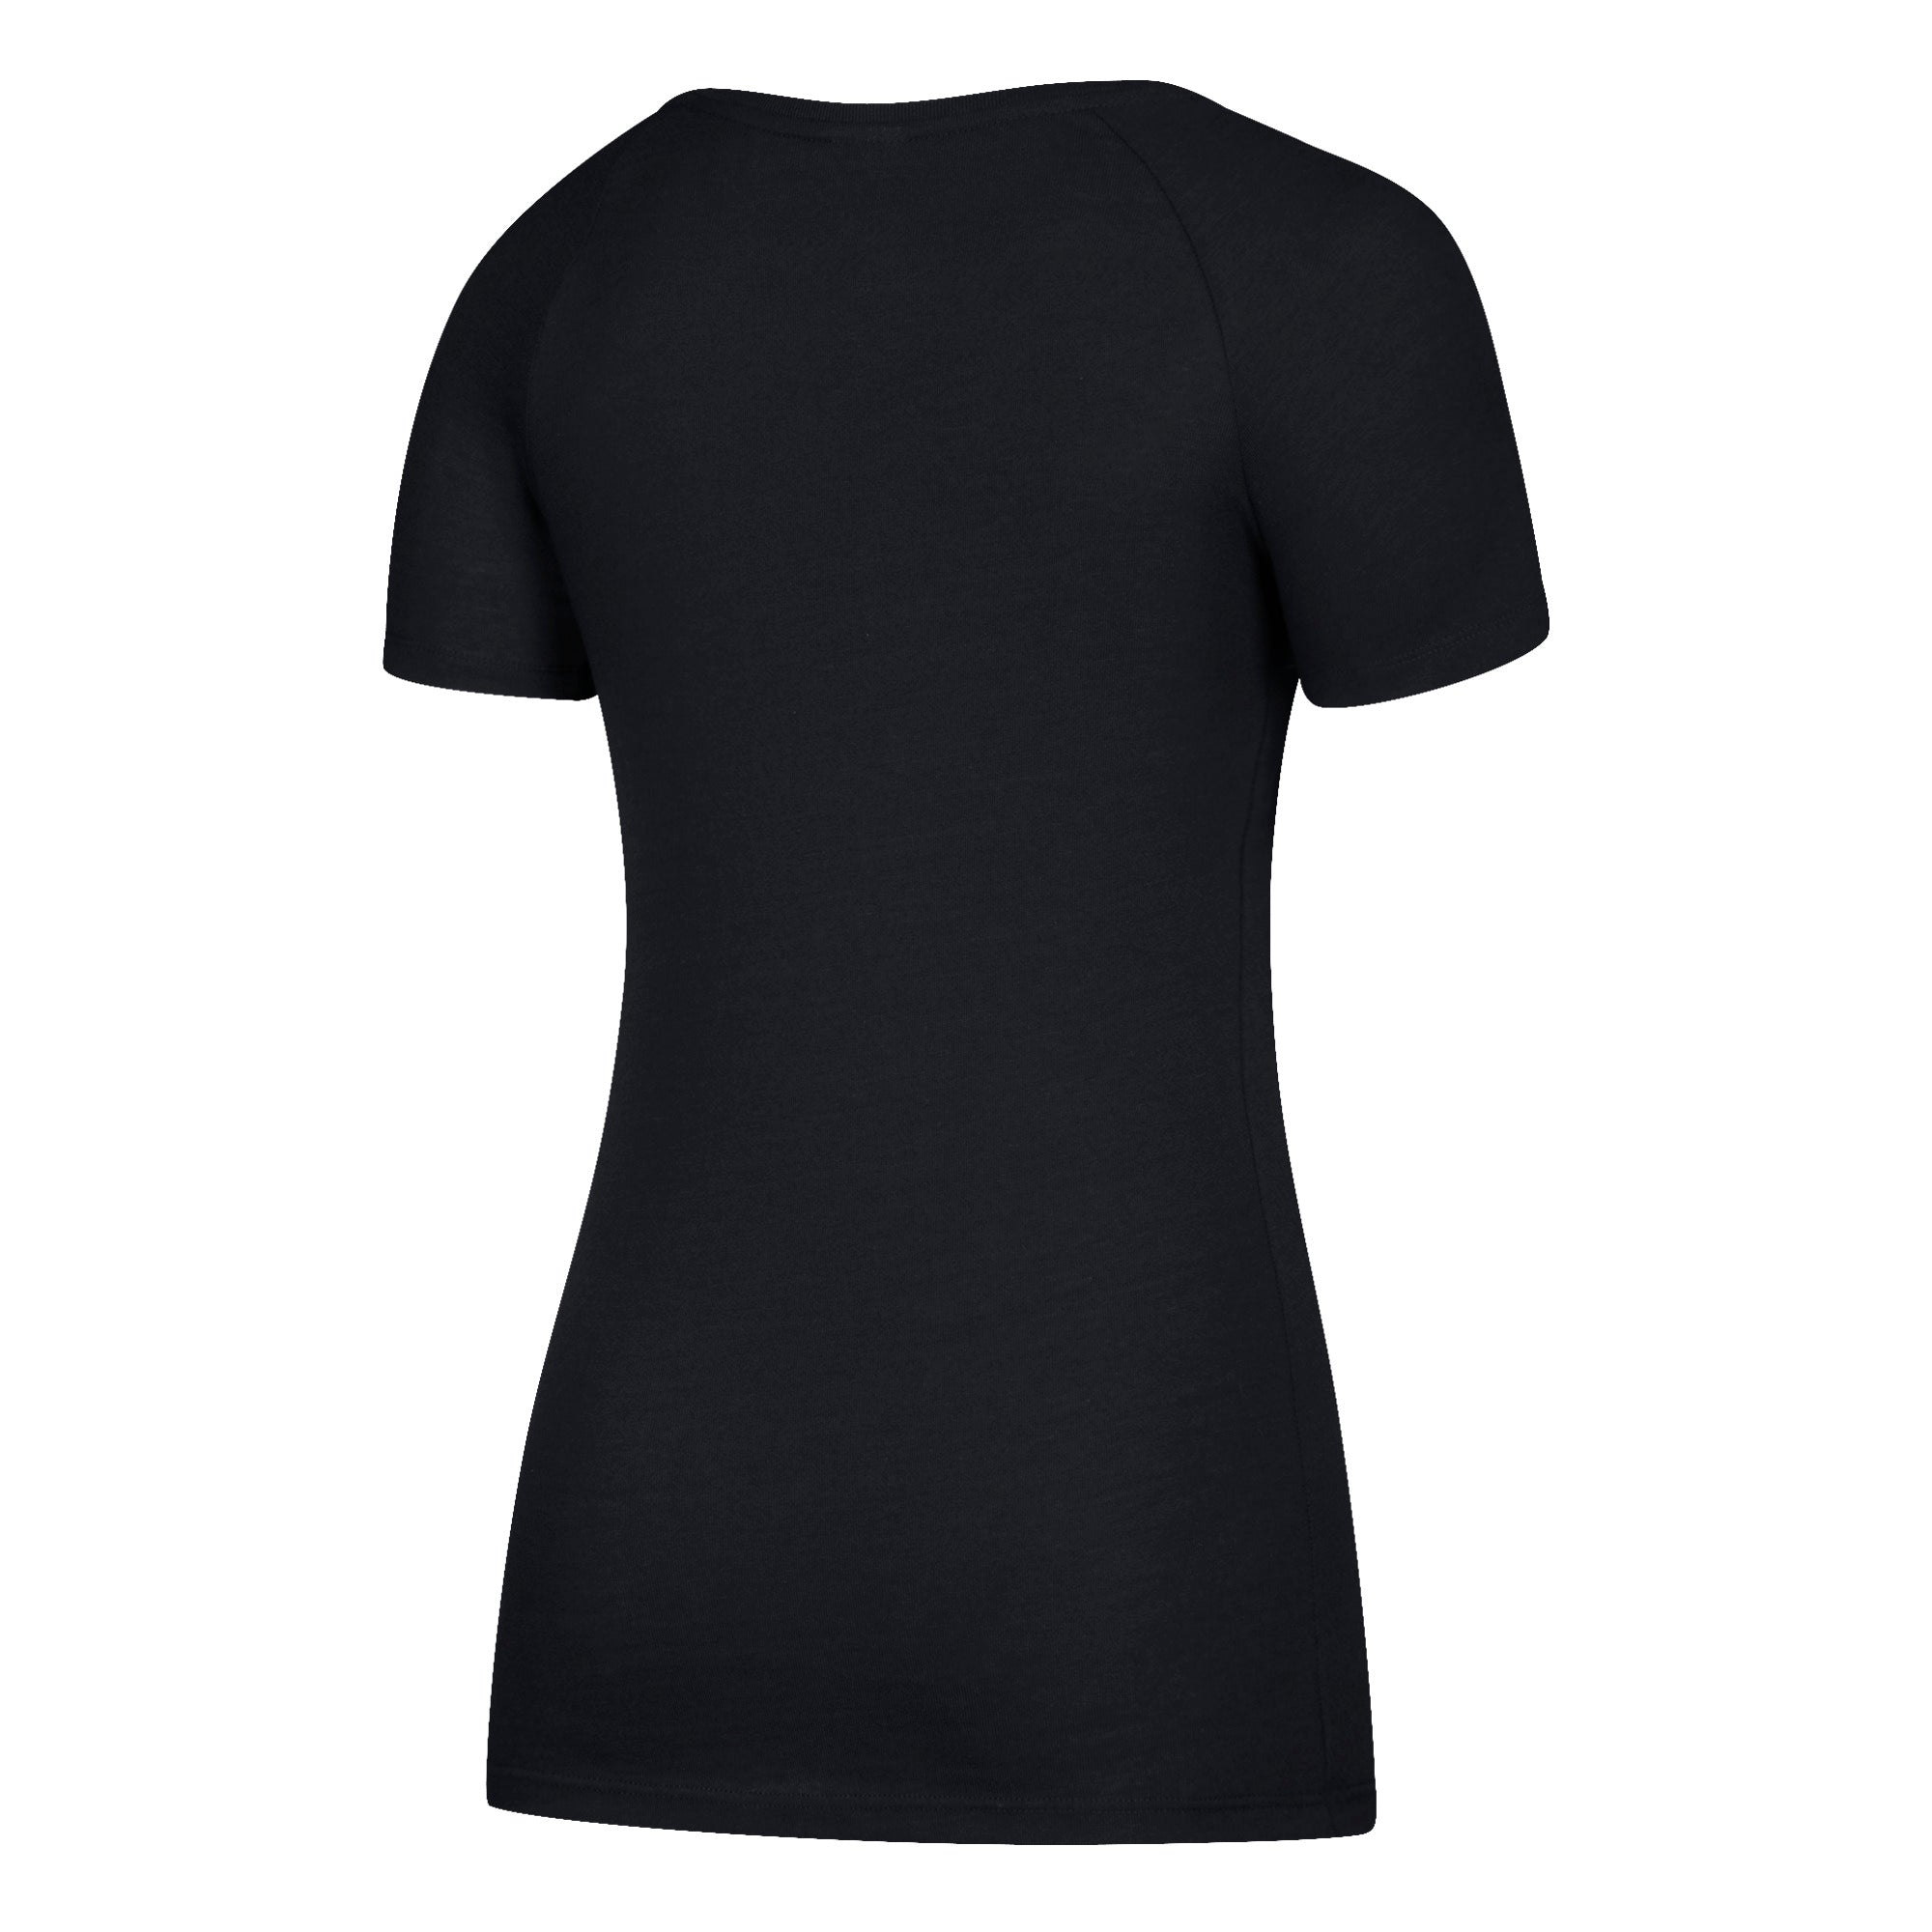 Miami Hurricanes adidas Women's Subtle Shine Tri-Blend Cap Sleeve V-Neck T-Shirt - Black